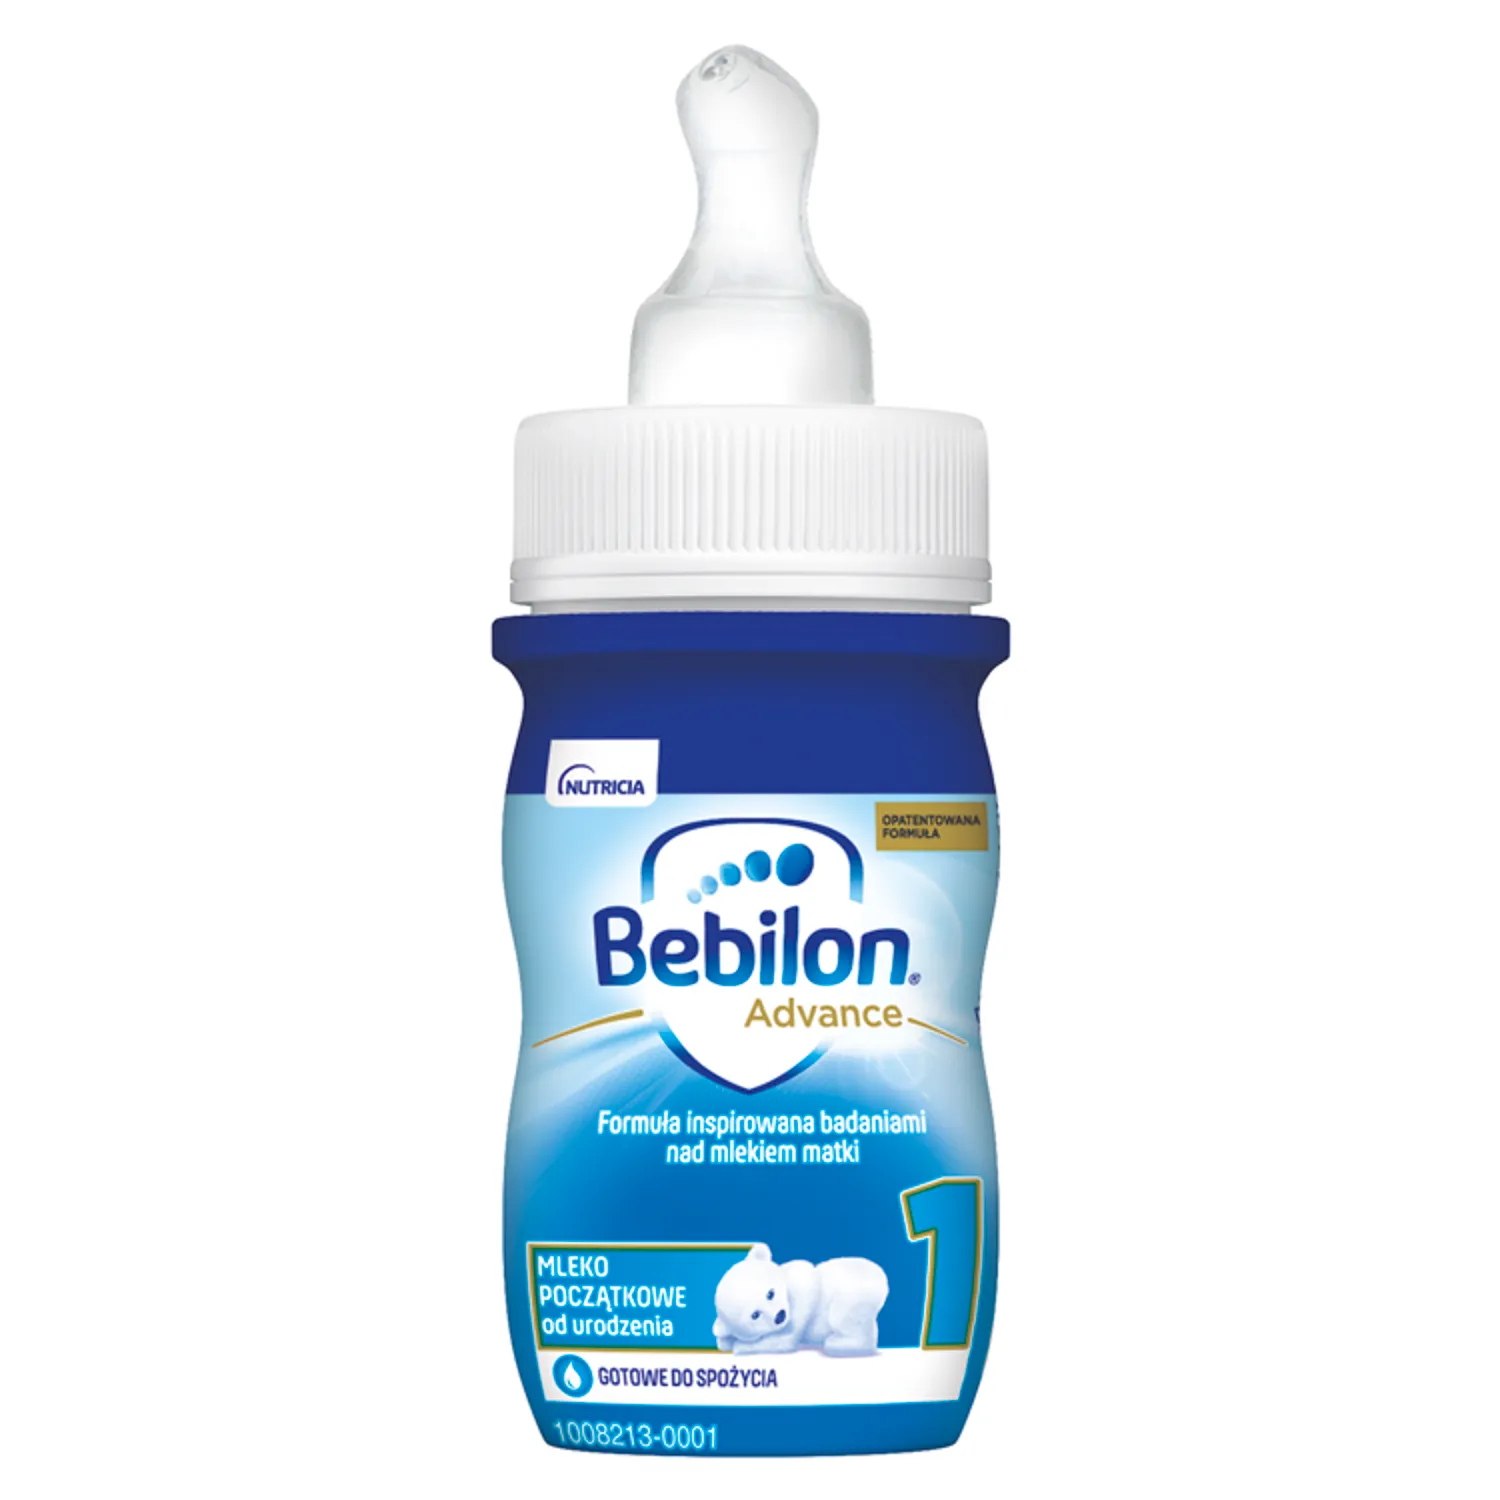 Bebilon 1 Pronutra Advance, mleko poczatkowe,  24 x 90 ml